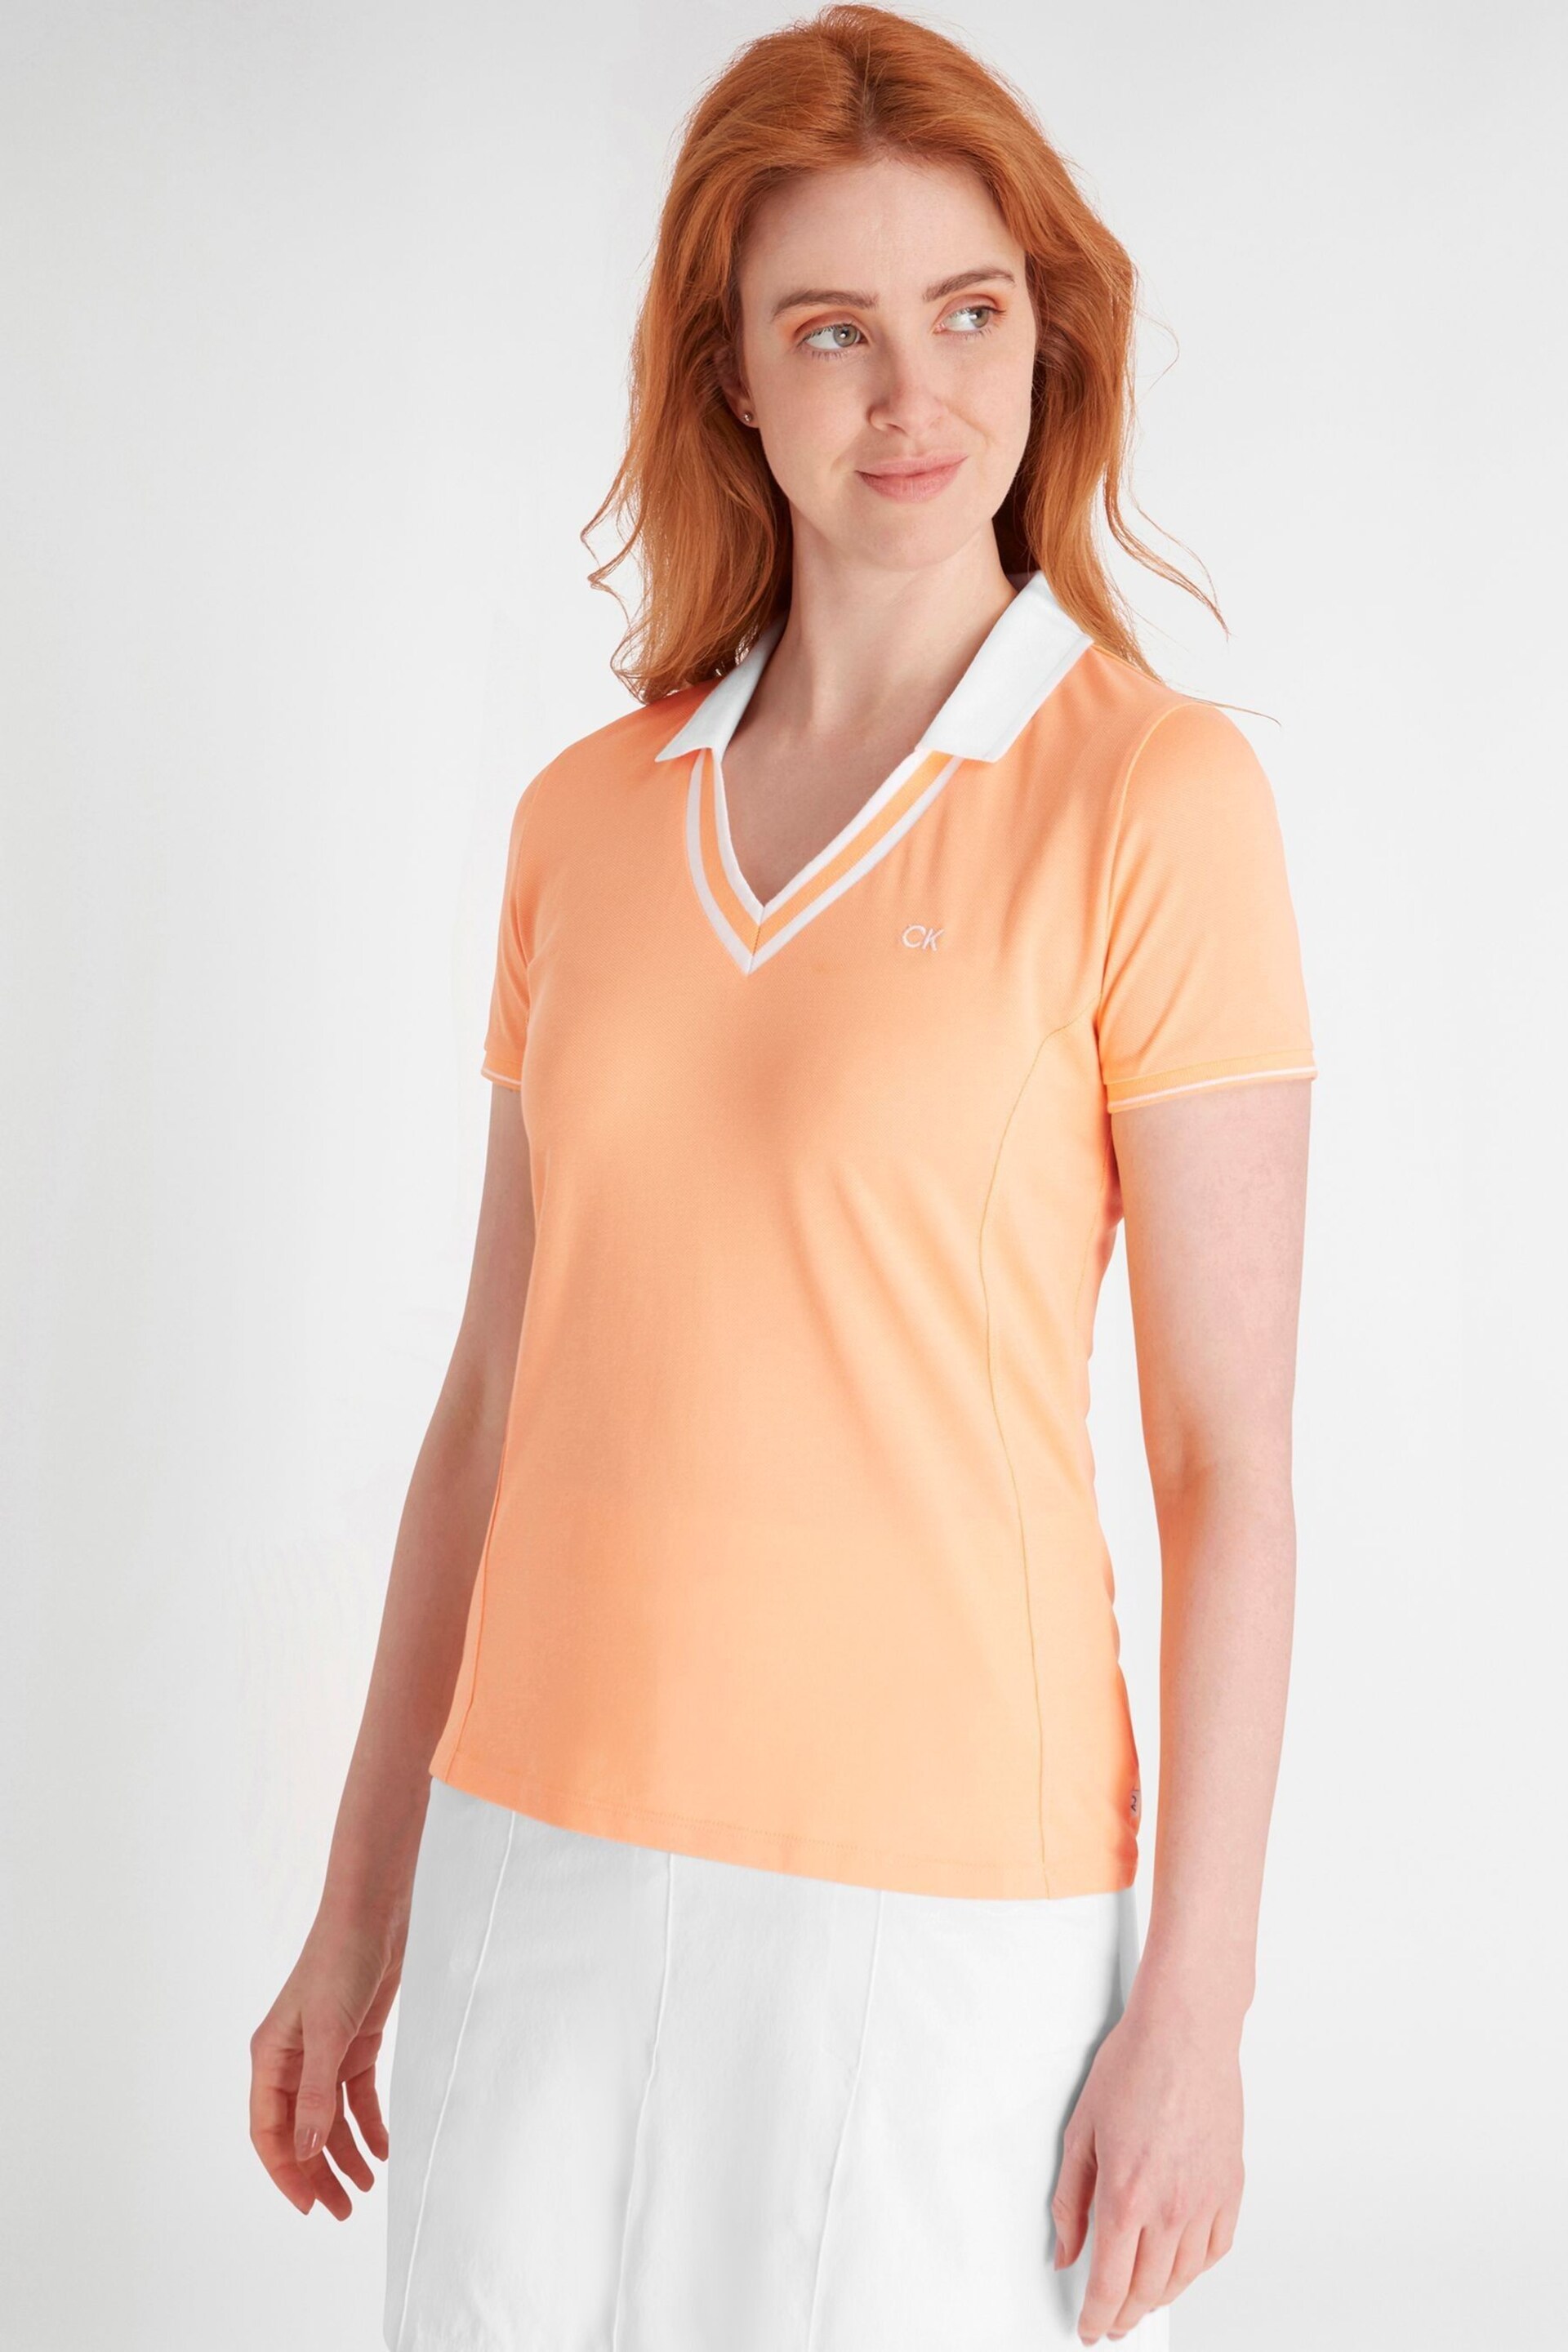 Calvin Klein Golf Orange Delaware Polo Shirt - Image 1 of 8